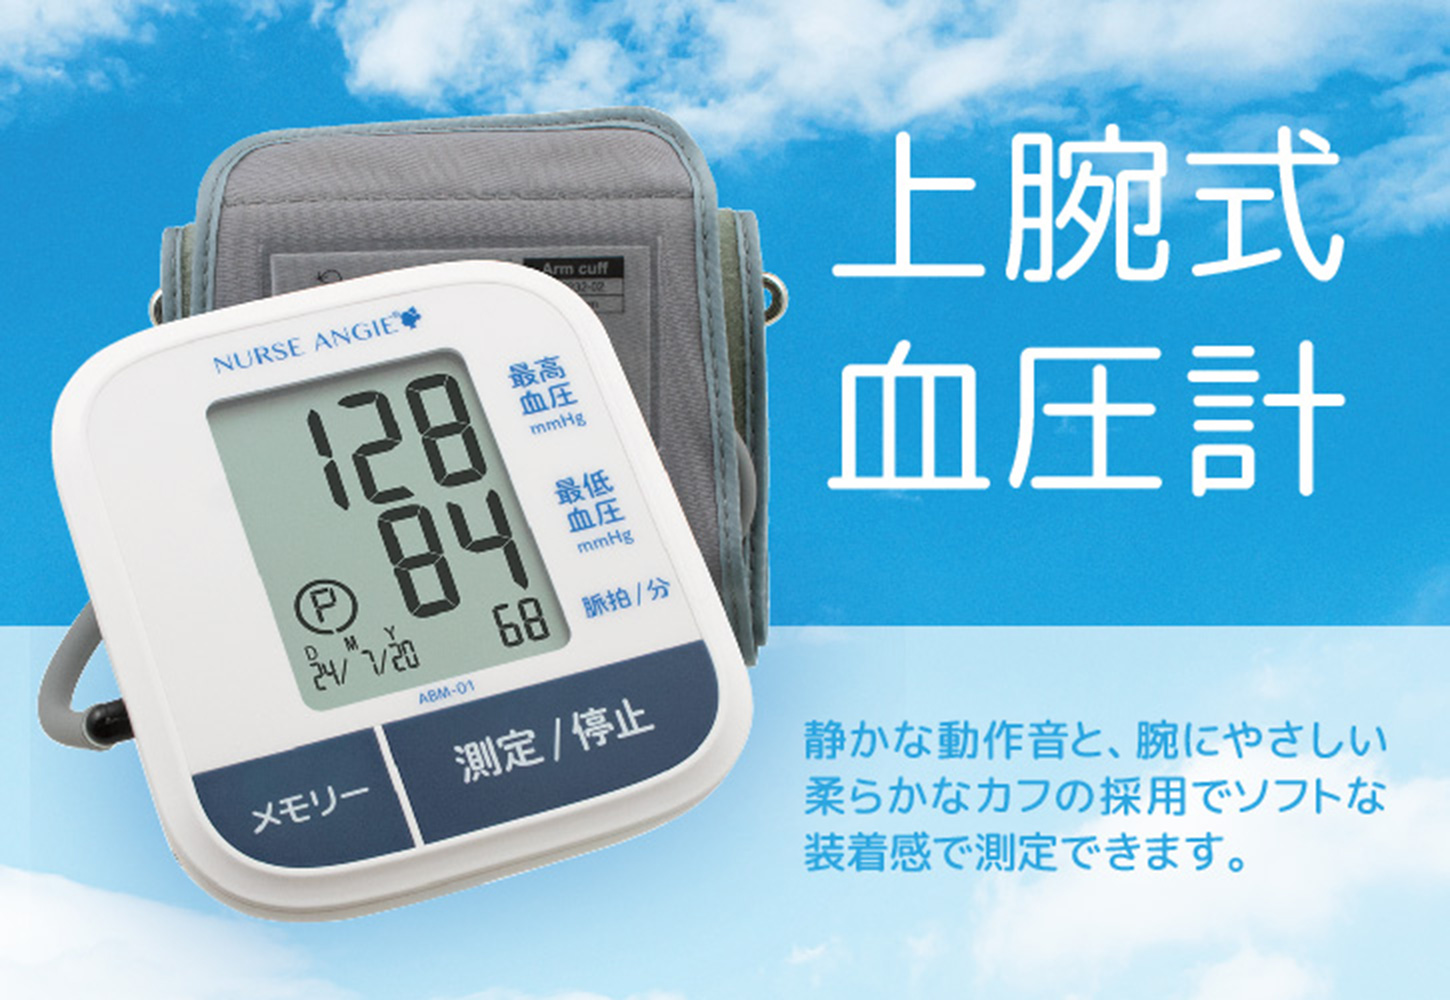 NURSE ANGIE | 非接触式体温計をはじめとした医療機器のブランド。